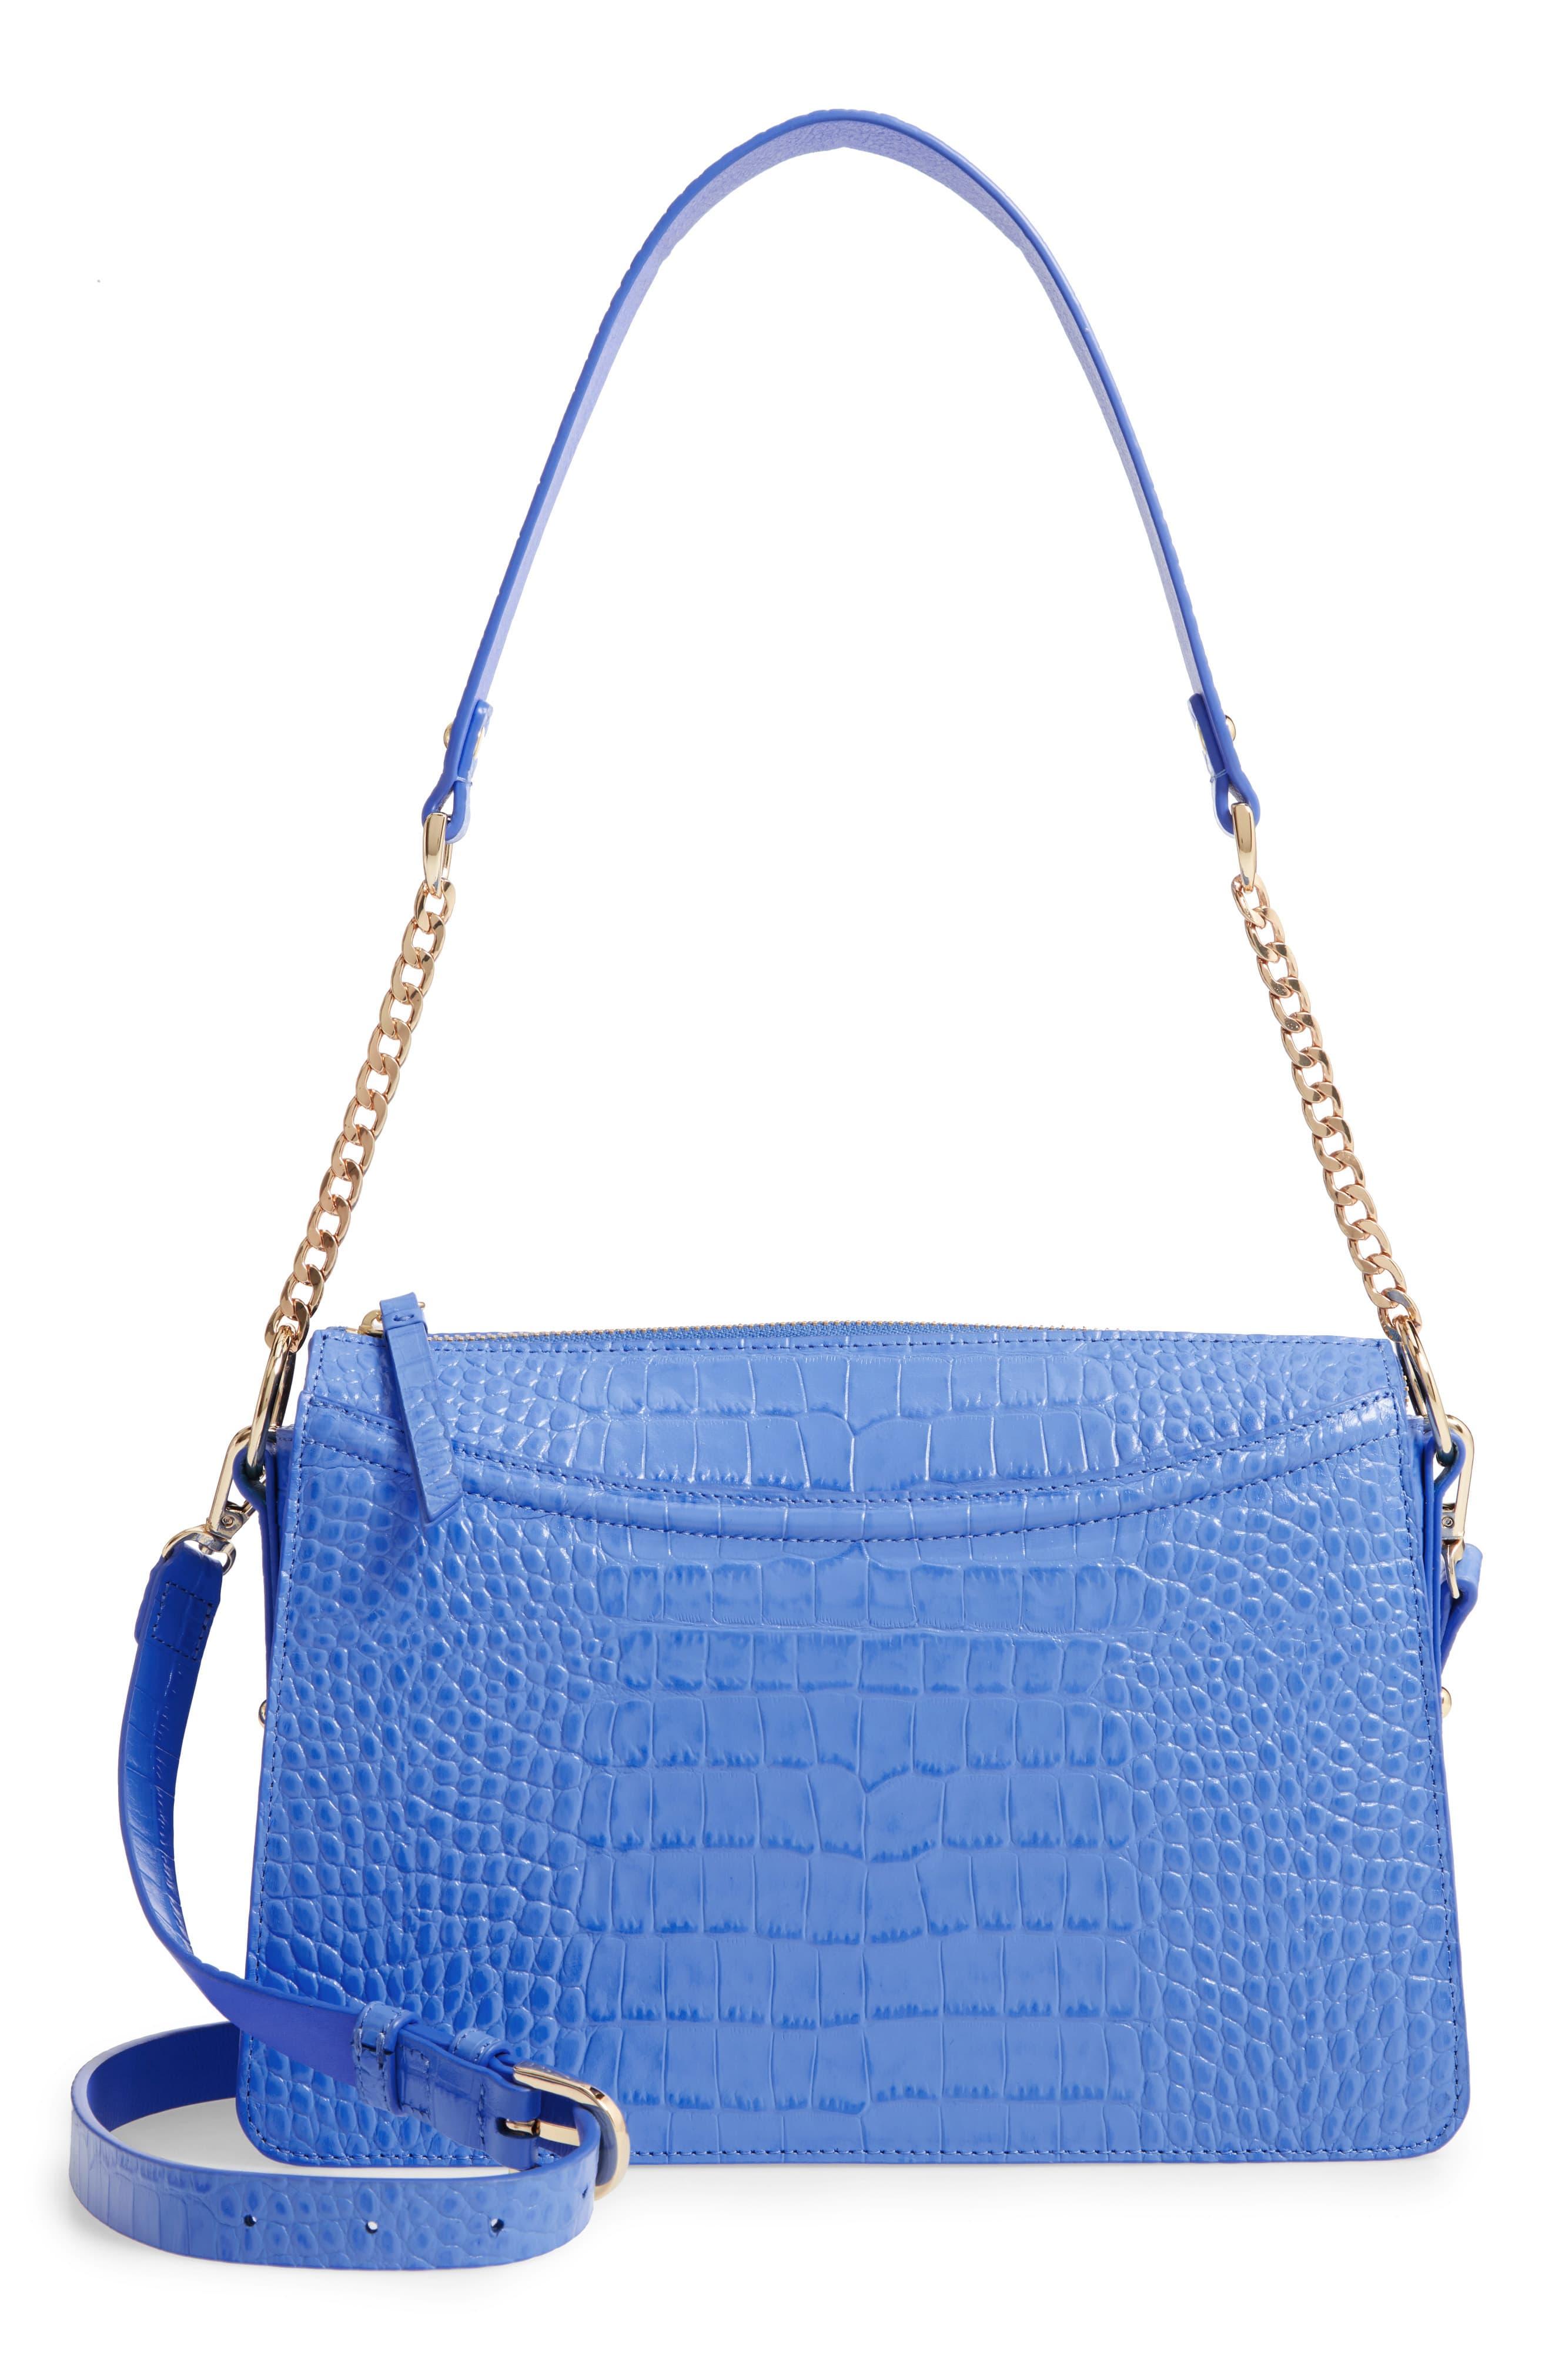 Nordstrom Lola Leather Crossbody Bag in Blue - Lyst